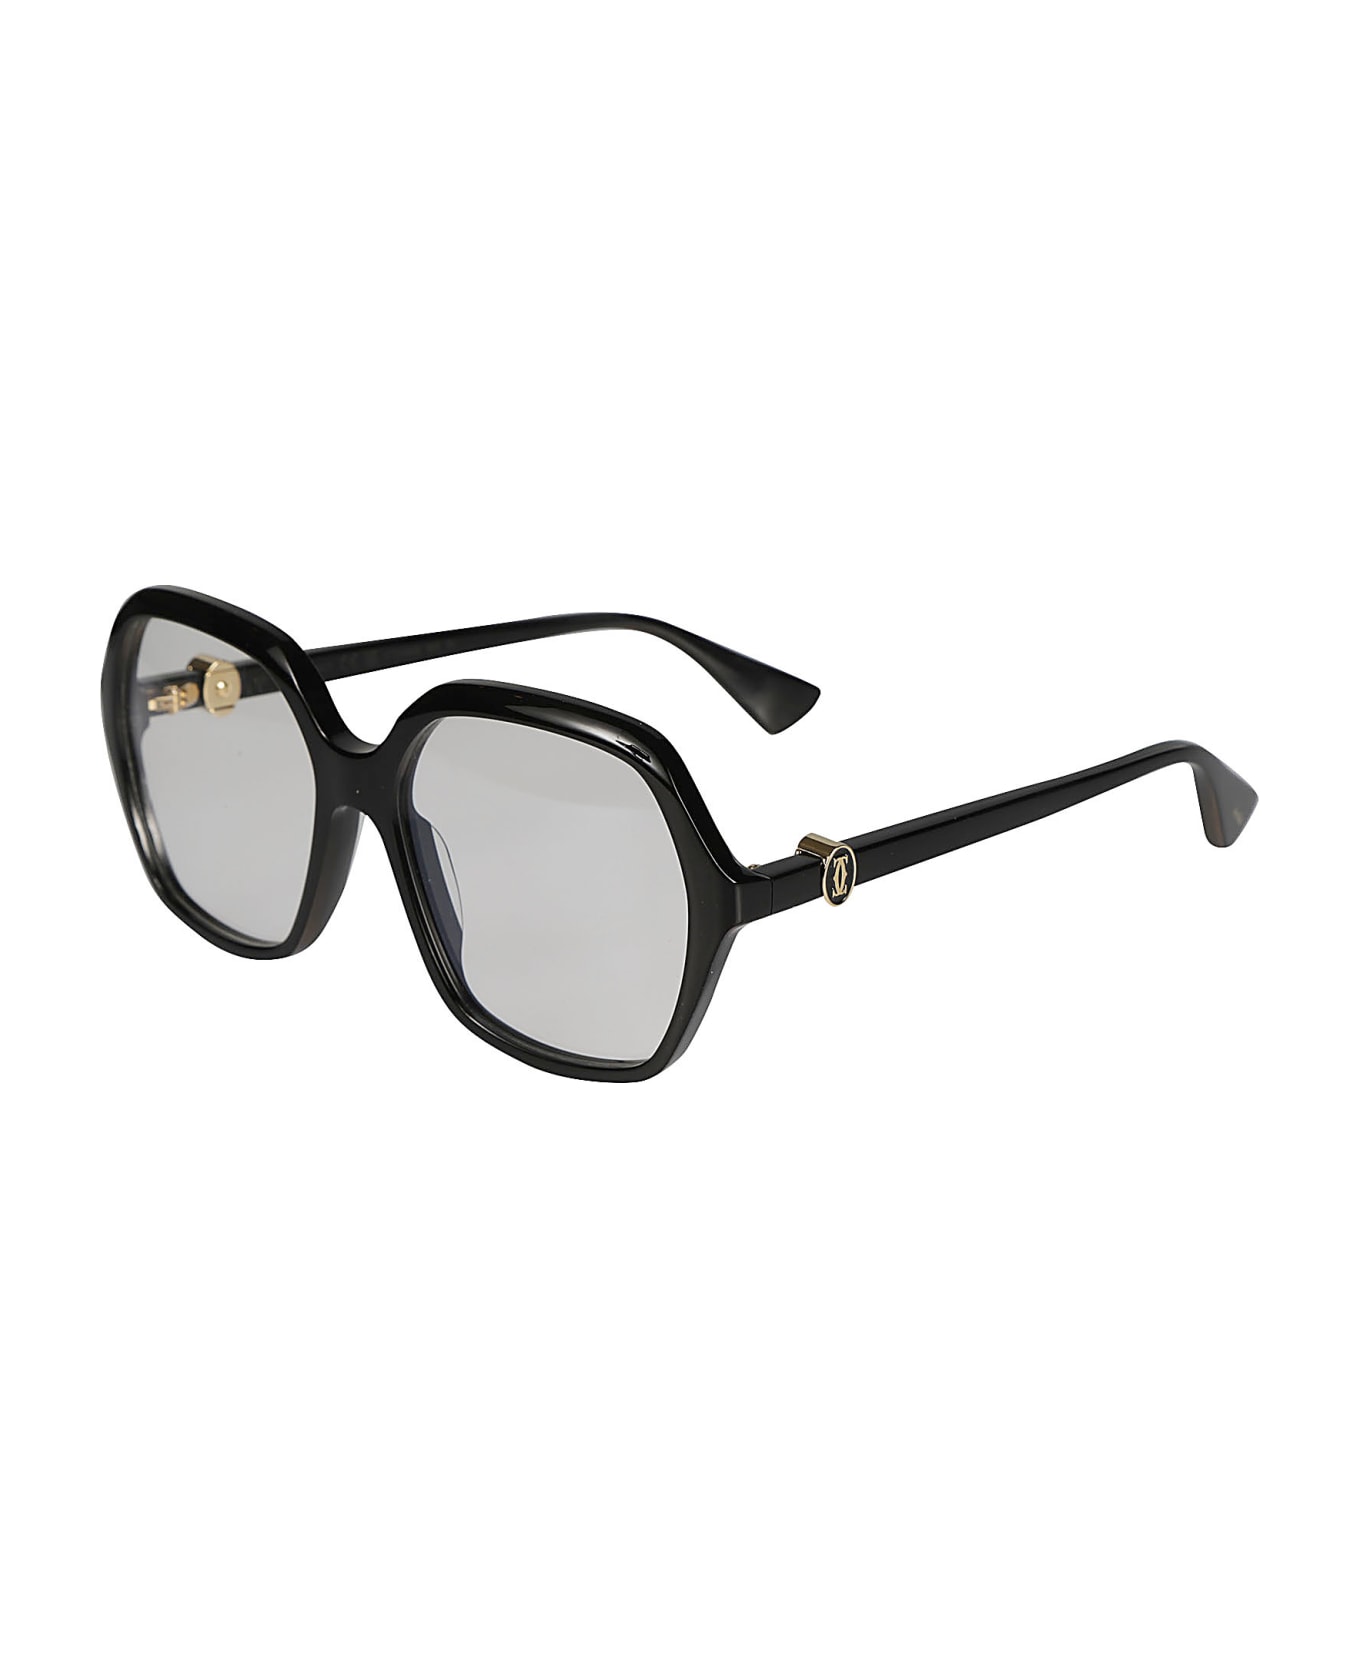 Cartier Eyewear Pentagon Rim Clear Lens Glasses - Black/Transparent アイウェア